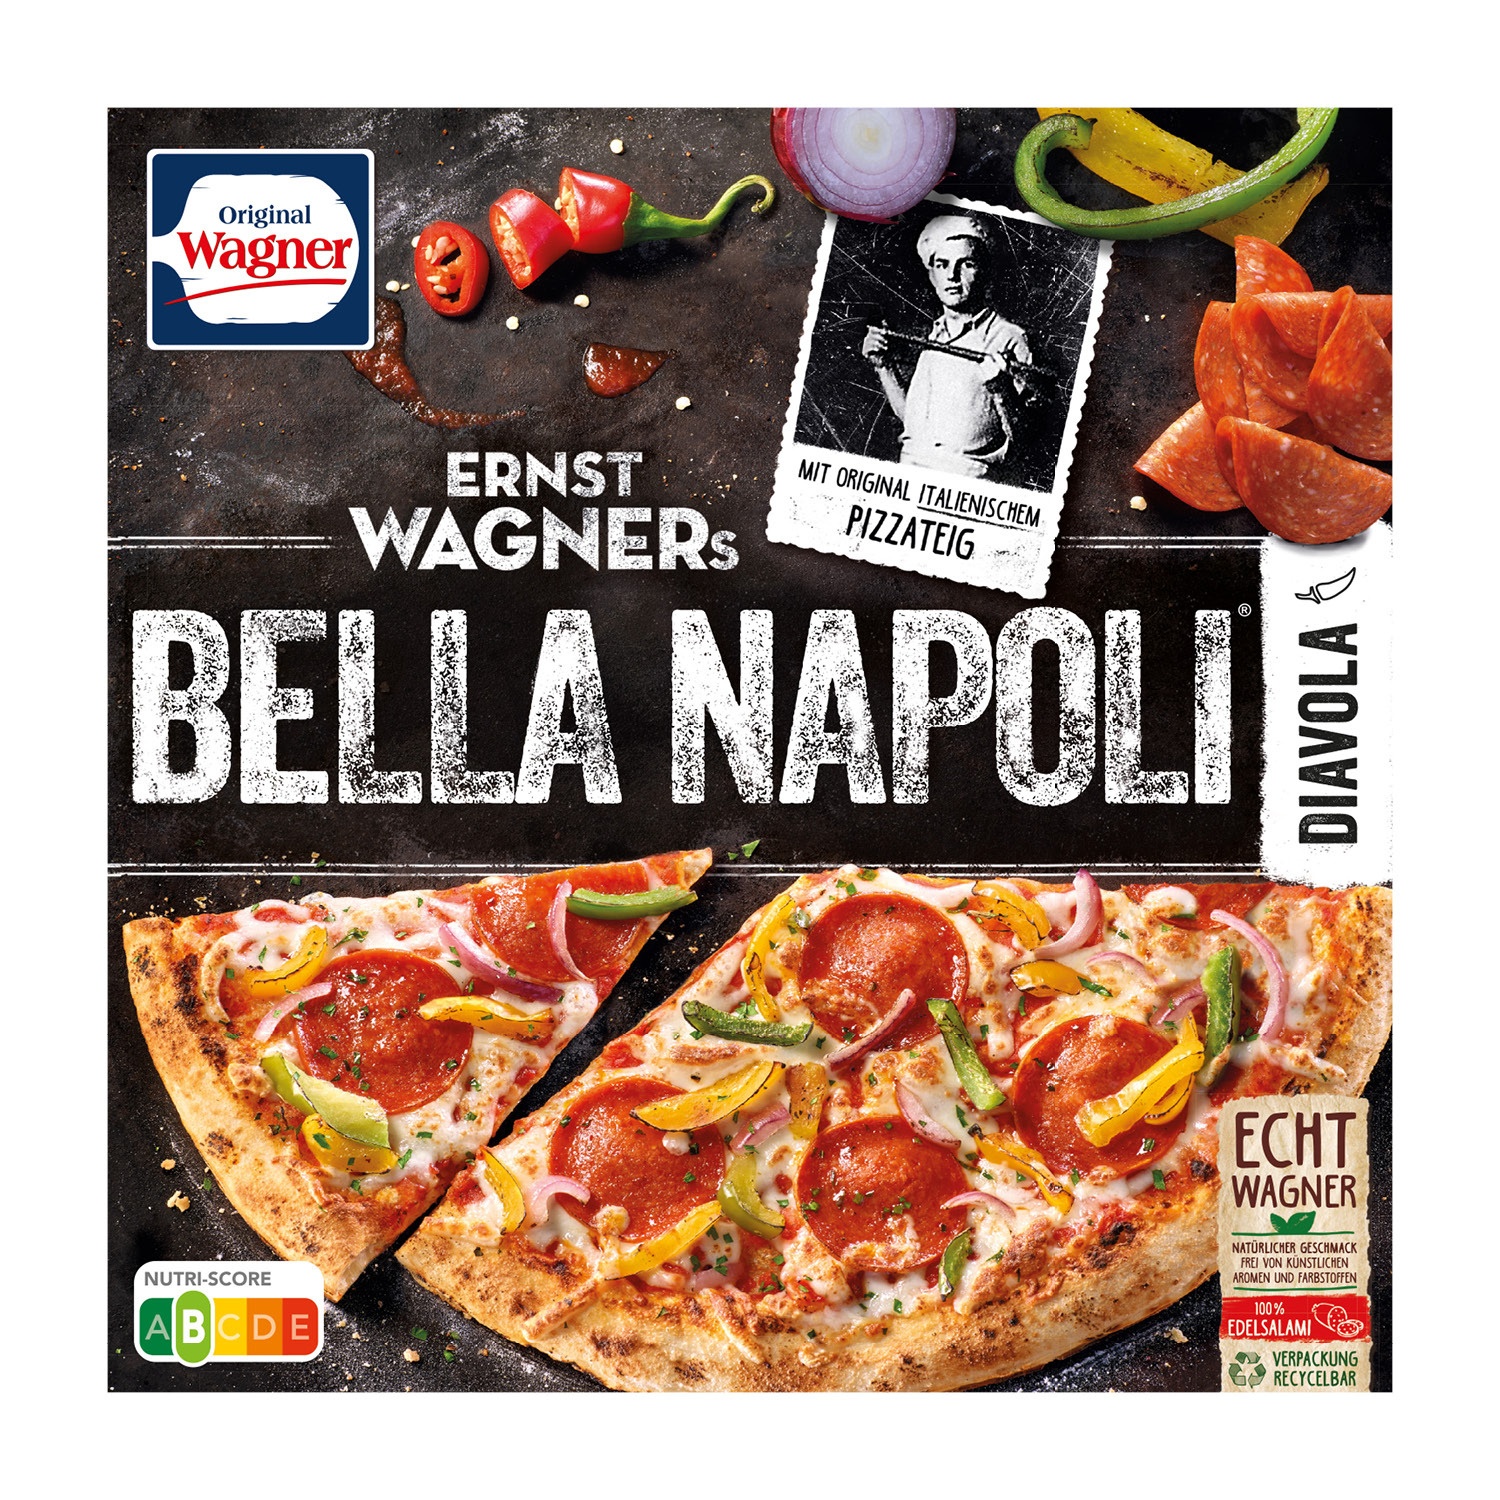 ORIGINAL WAGNER Ernst Wagners Bella Napoli Pizza 430 g